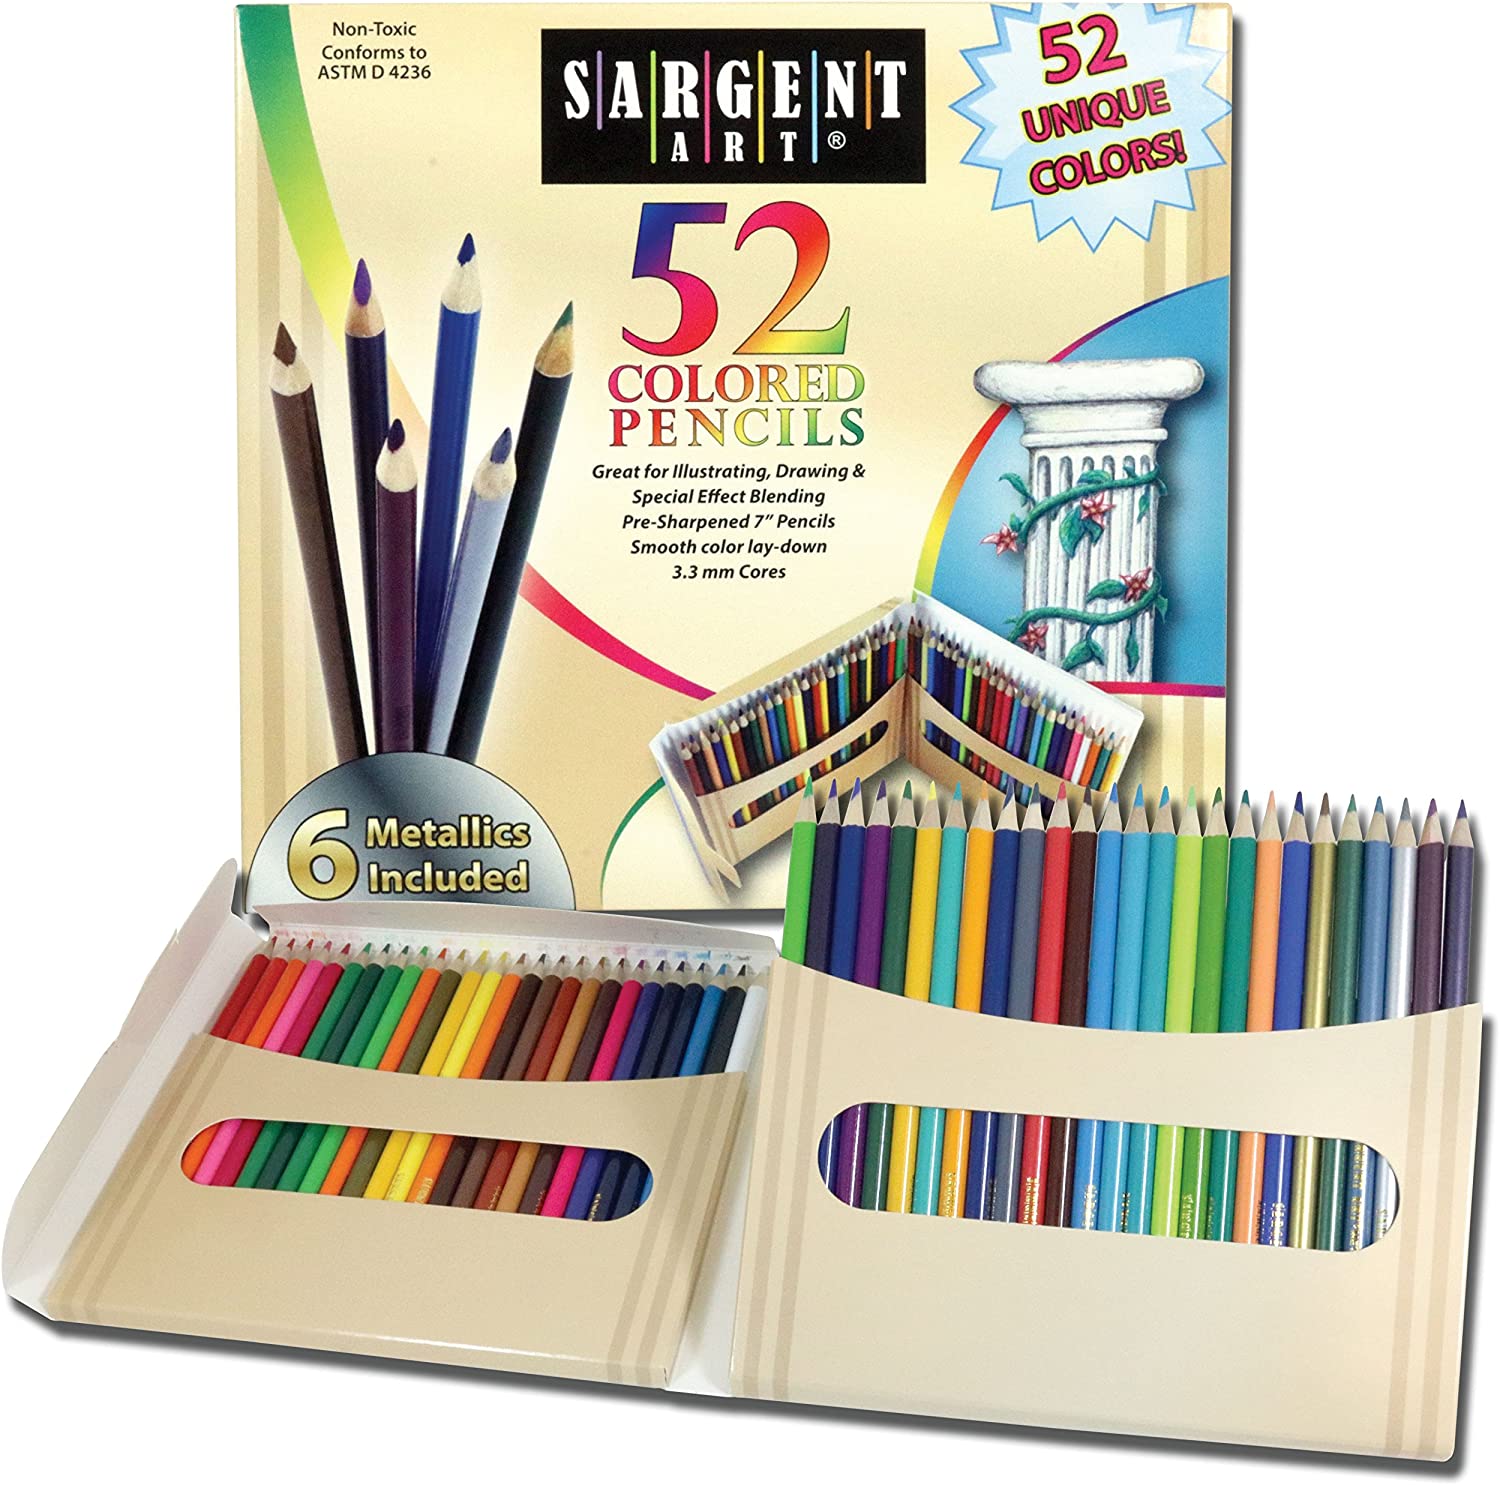  CHENGU 48 Pcs Rainbow Colored Pencils, 7 Color in 1